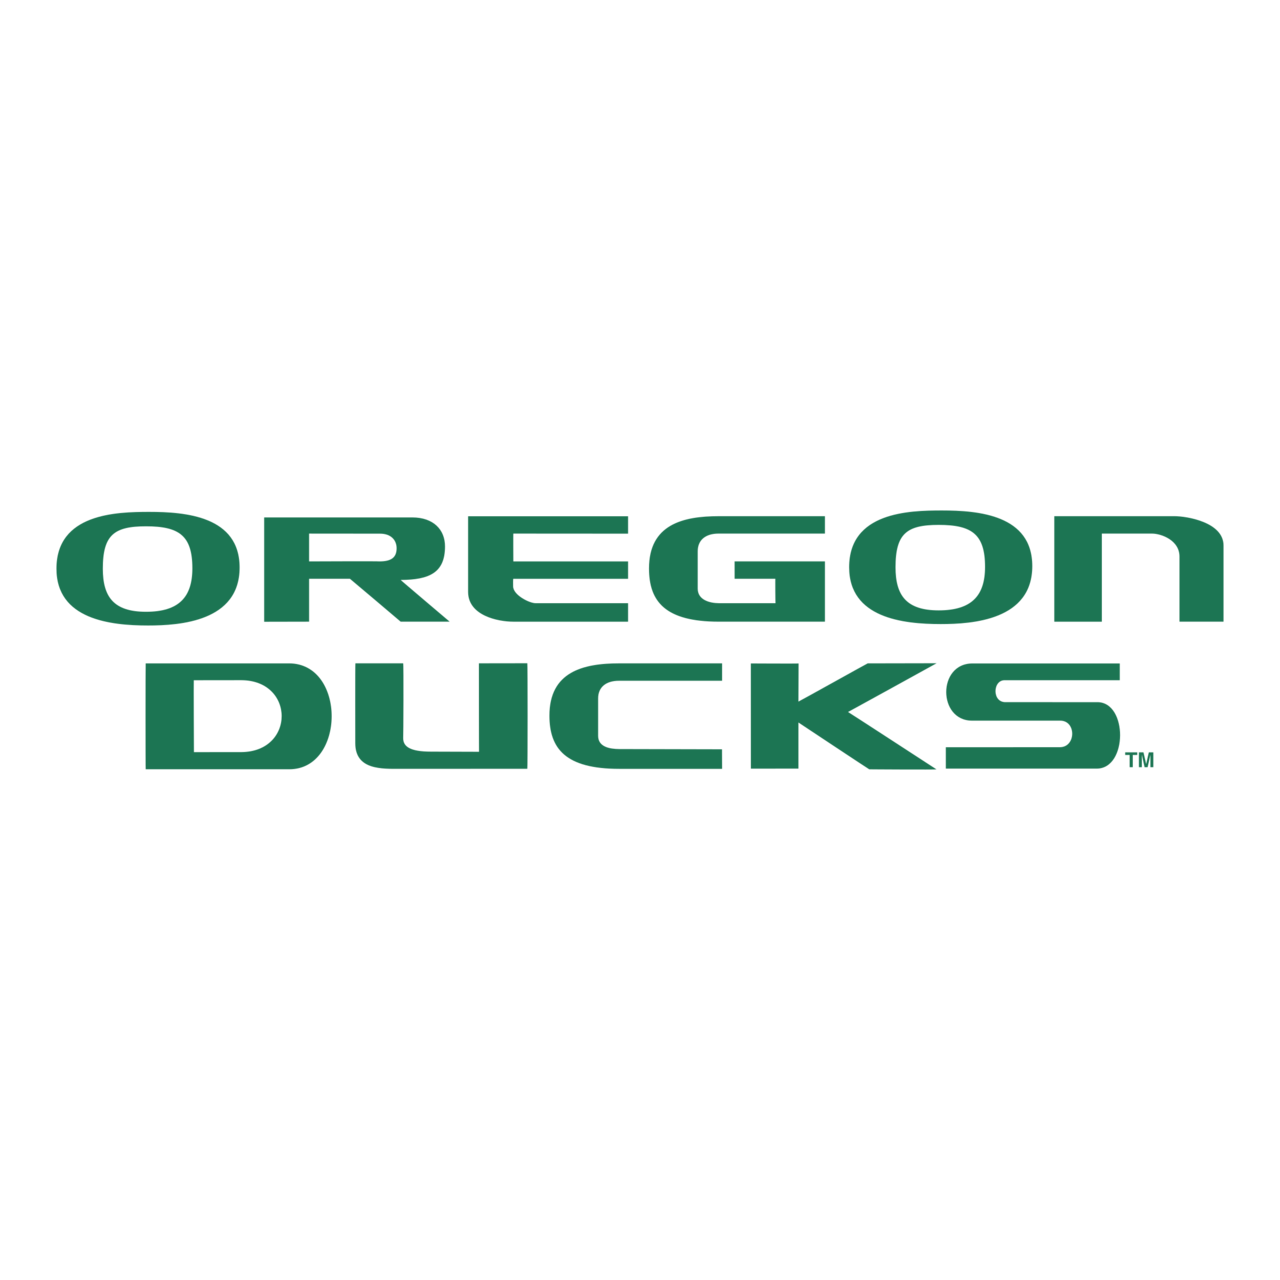 Download Oregon Ducks Football Logo PNG and Vector (PDF, SVG, Ai, EPS) Free